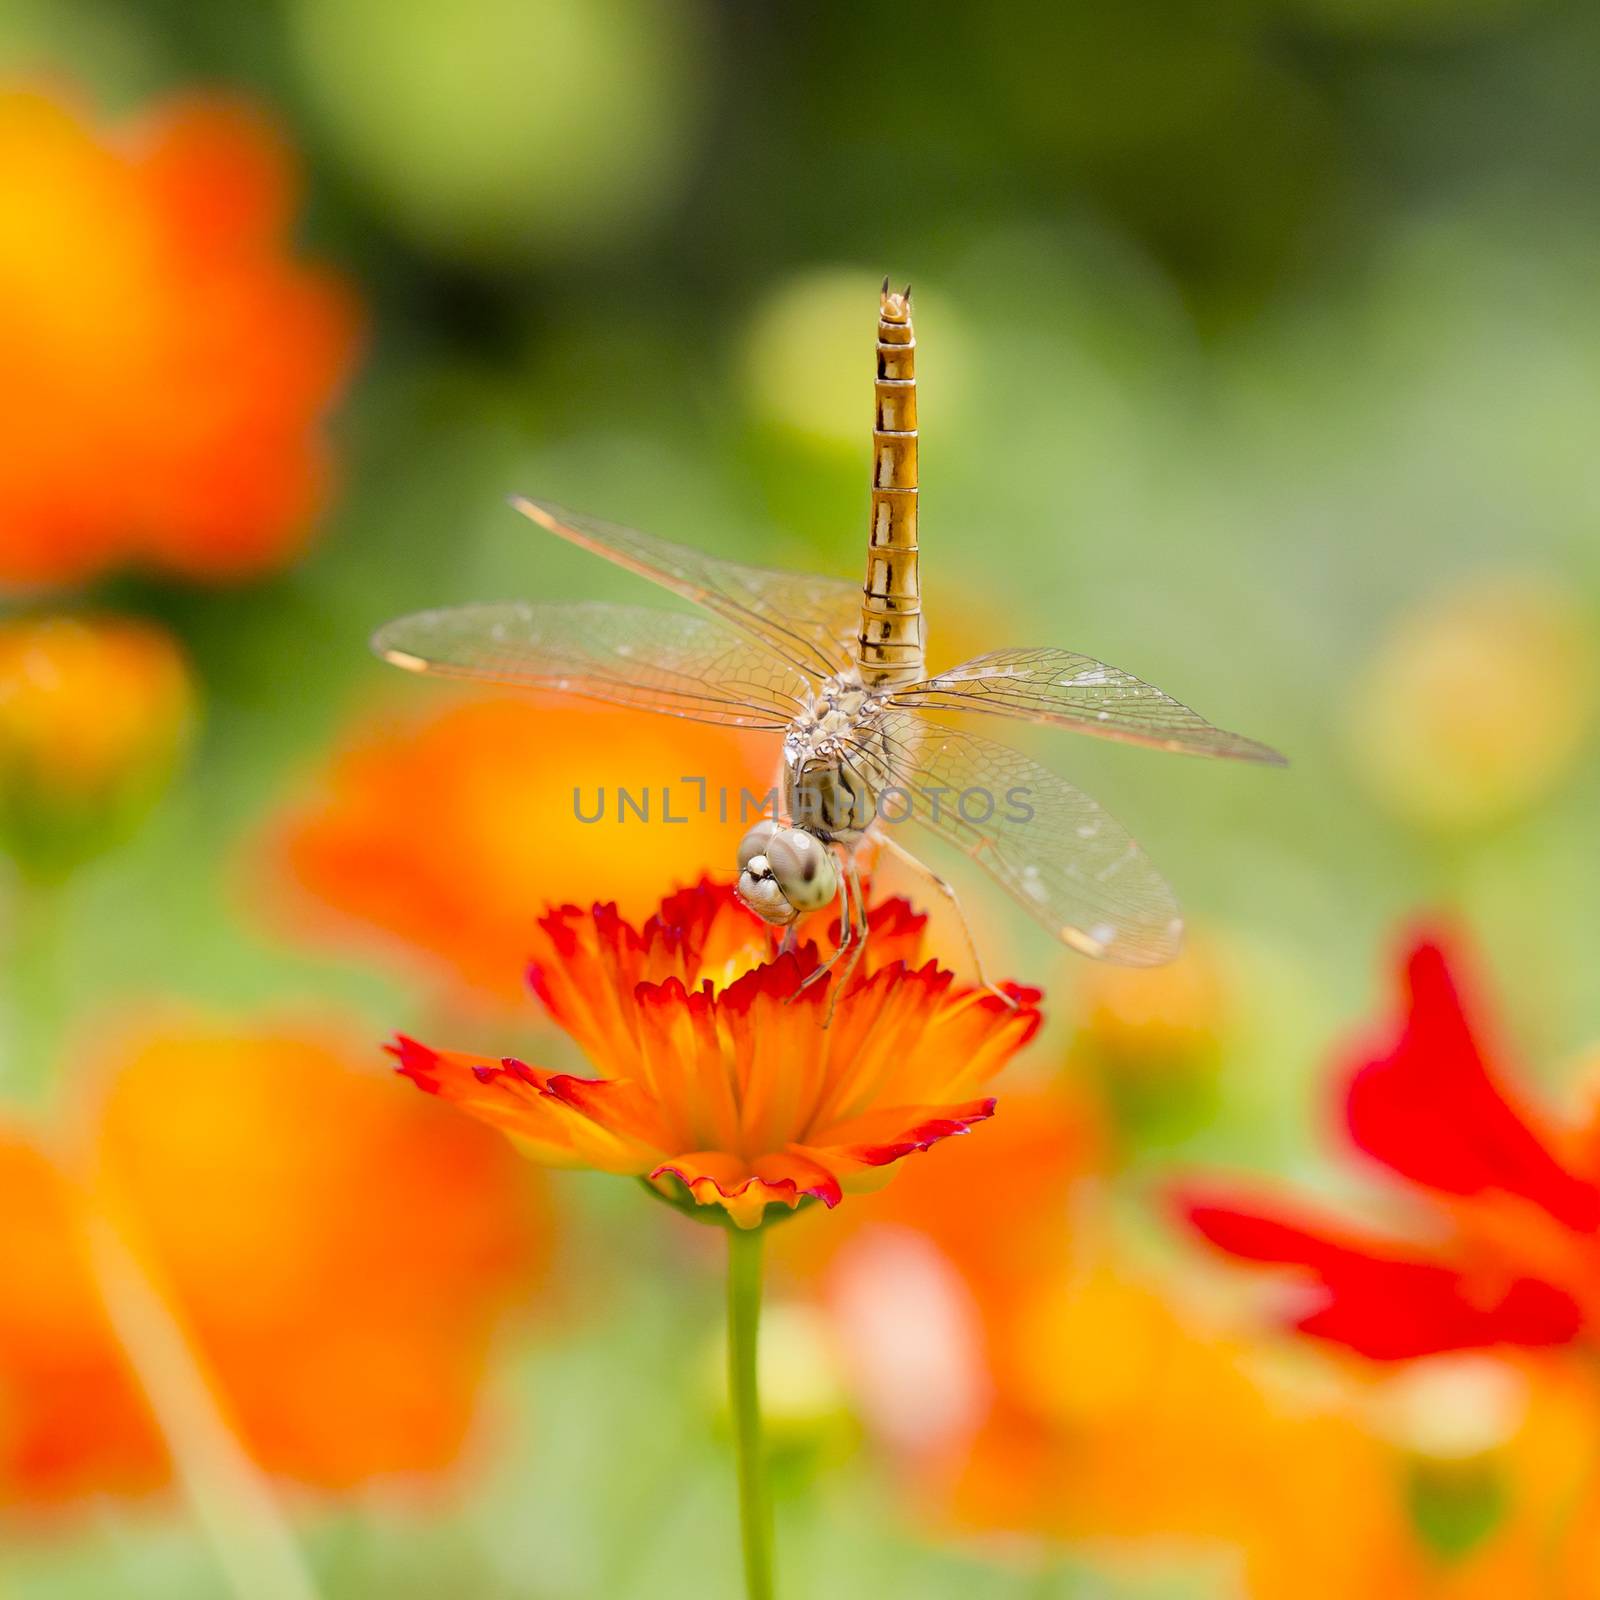 Dragonfly on orange flower with orange flowers background by art9858